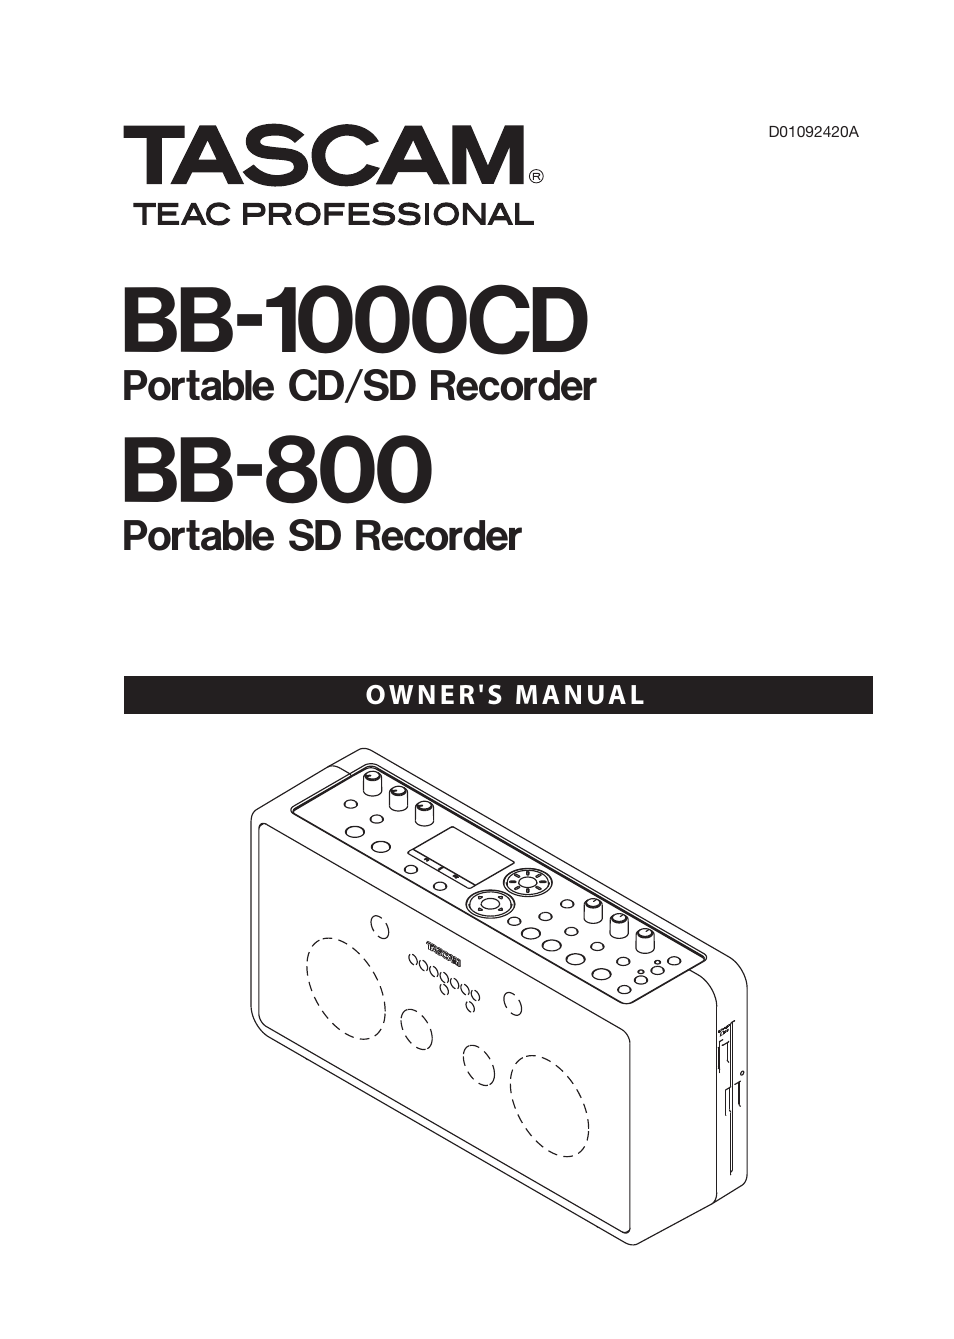 BB-800